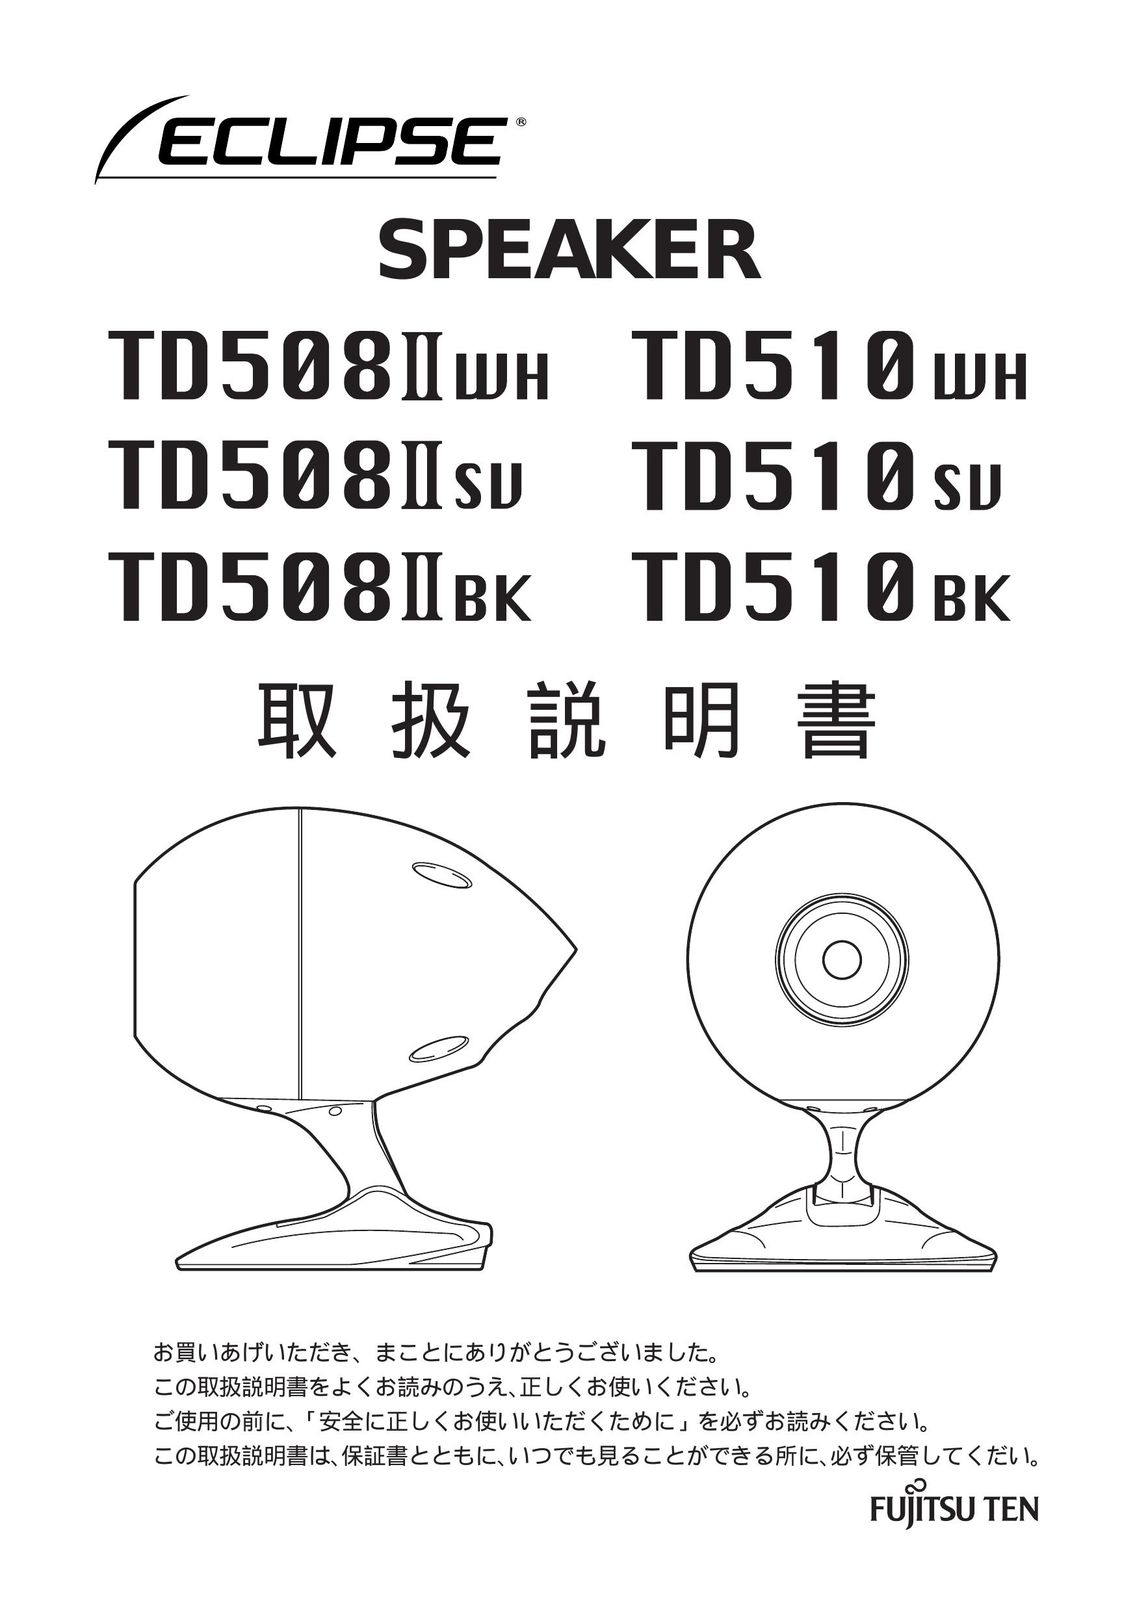 Eclipse - Fujitsu Ten TD510 BK Car Speaker User Manual